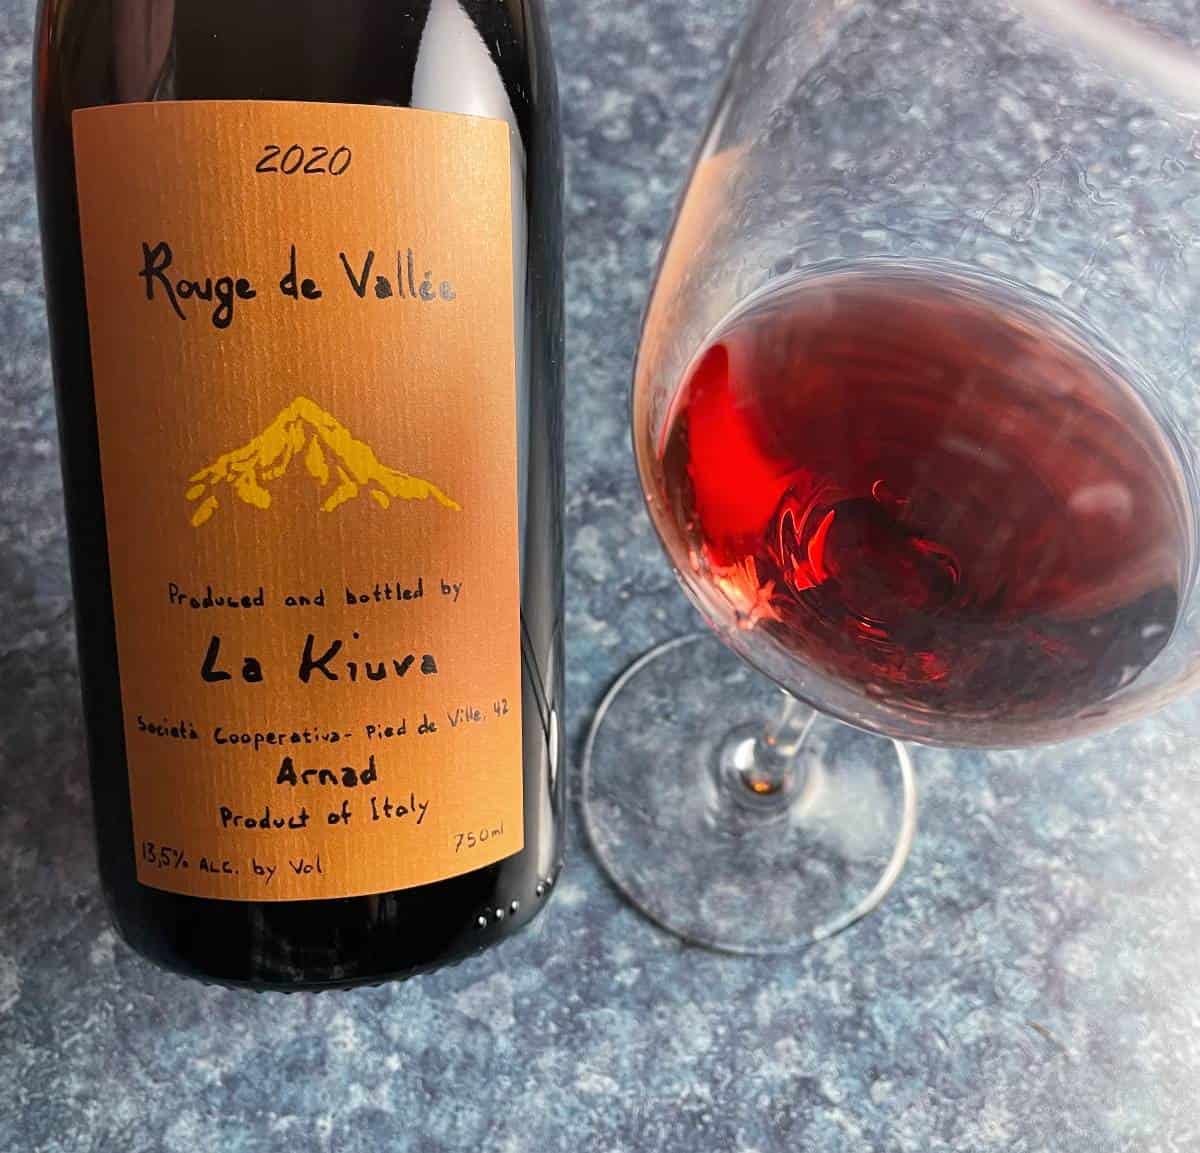 Bottle of La Kiuva Rouge de Vallée wine, with a glass of the red wine alongside the bottle.